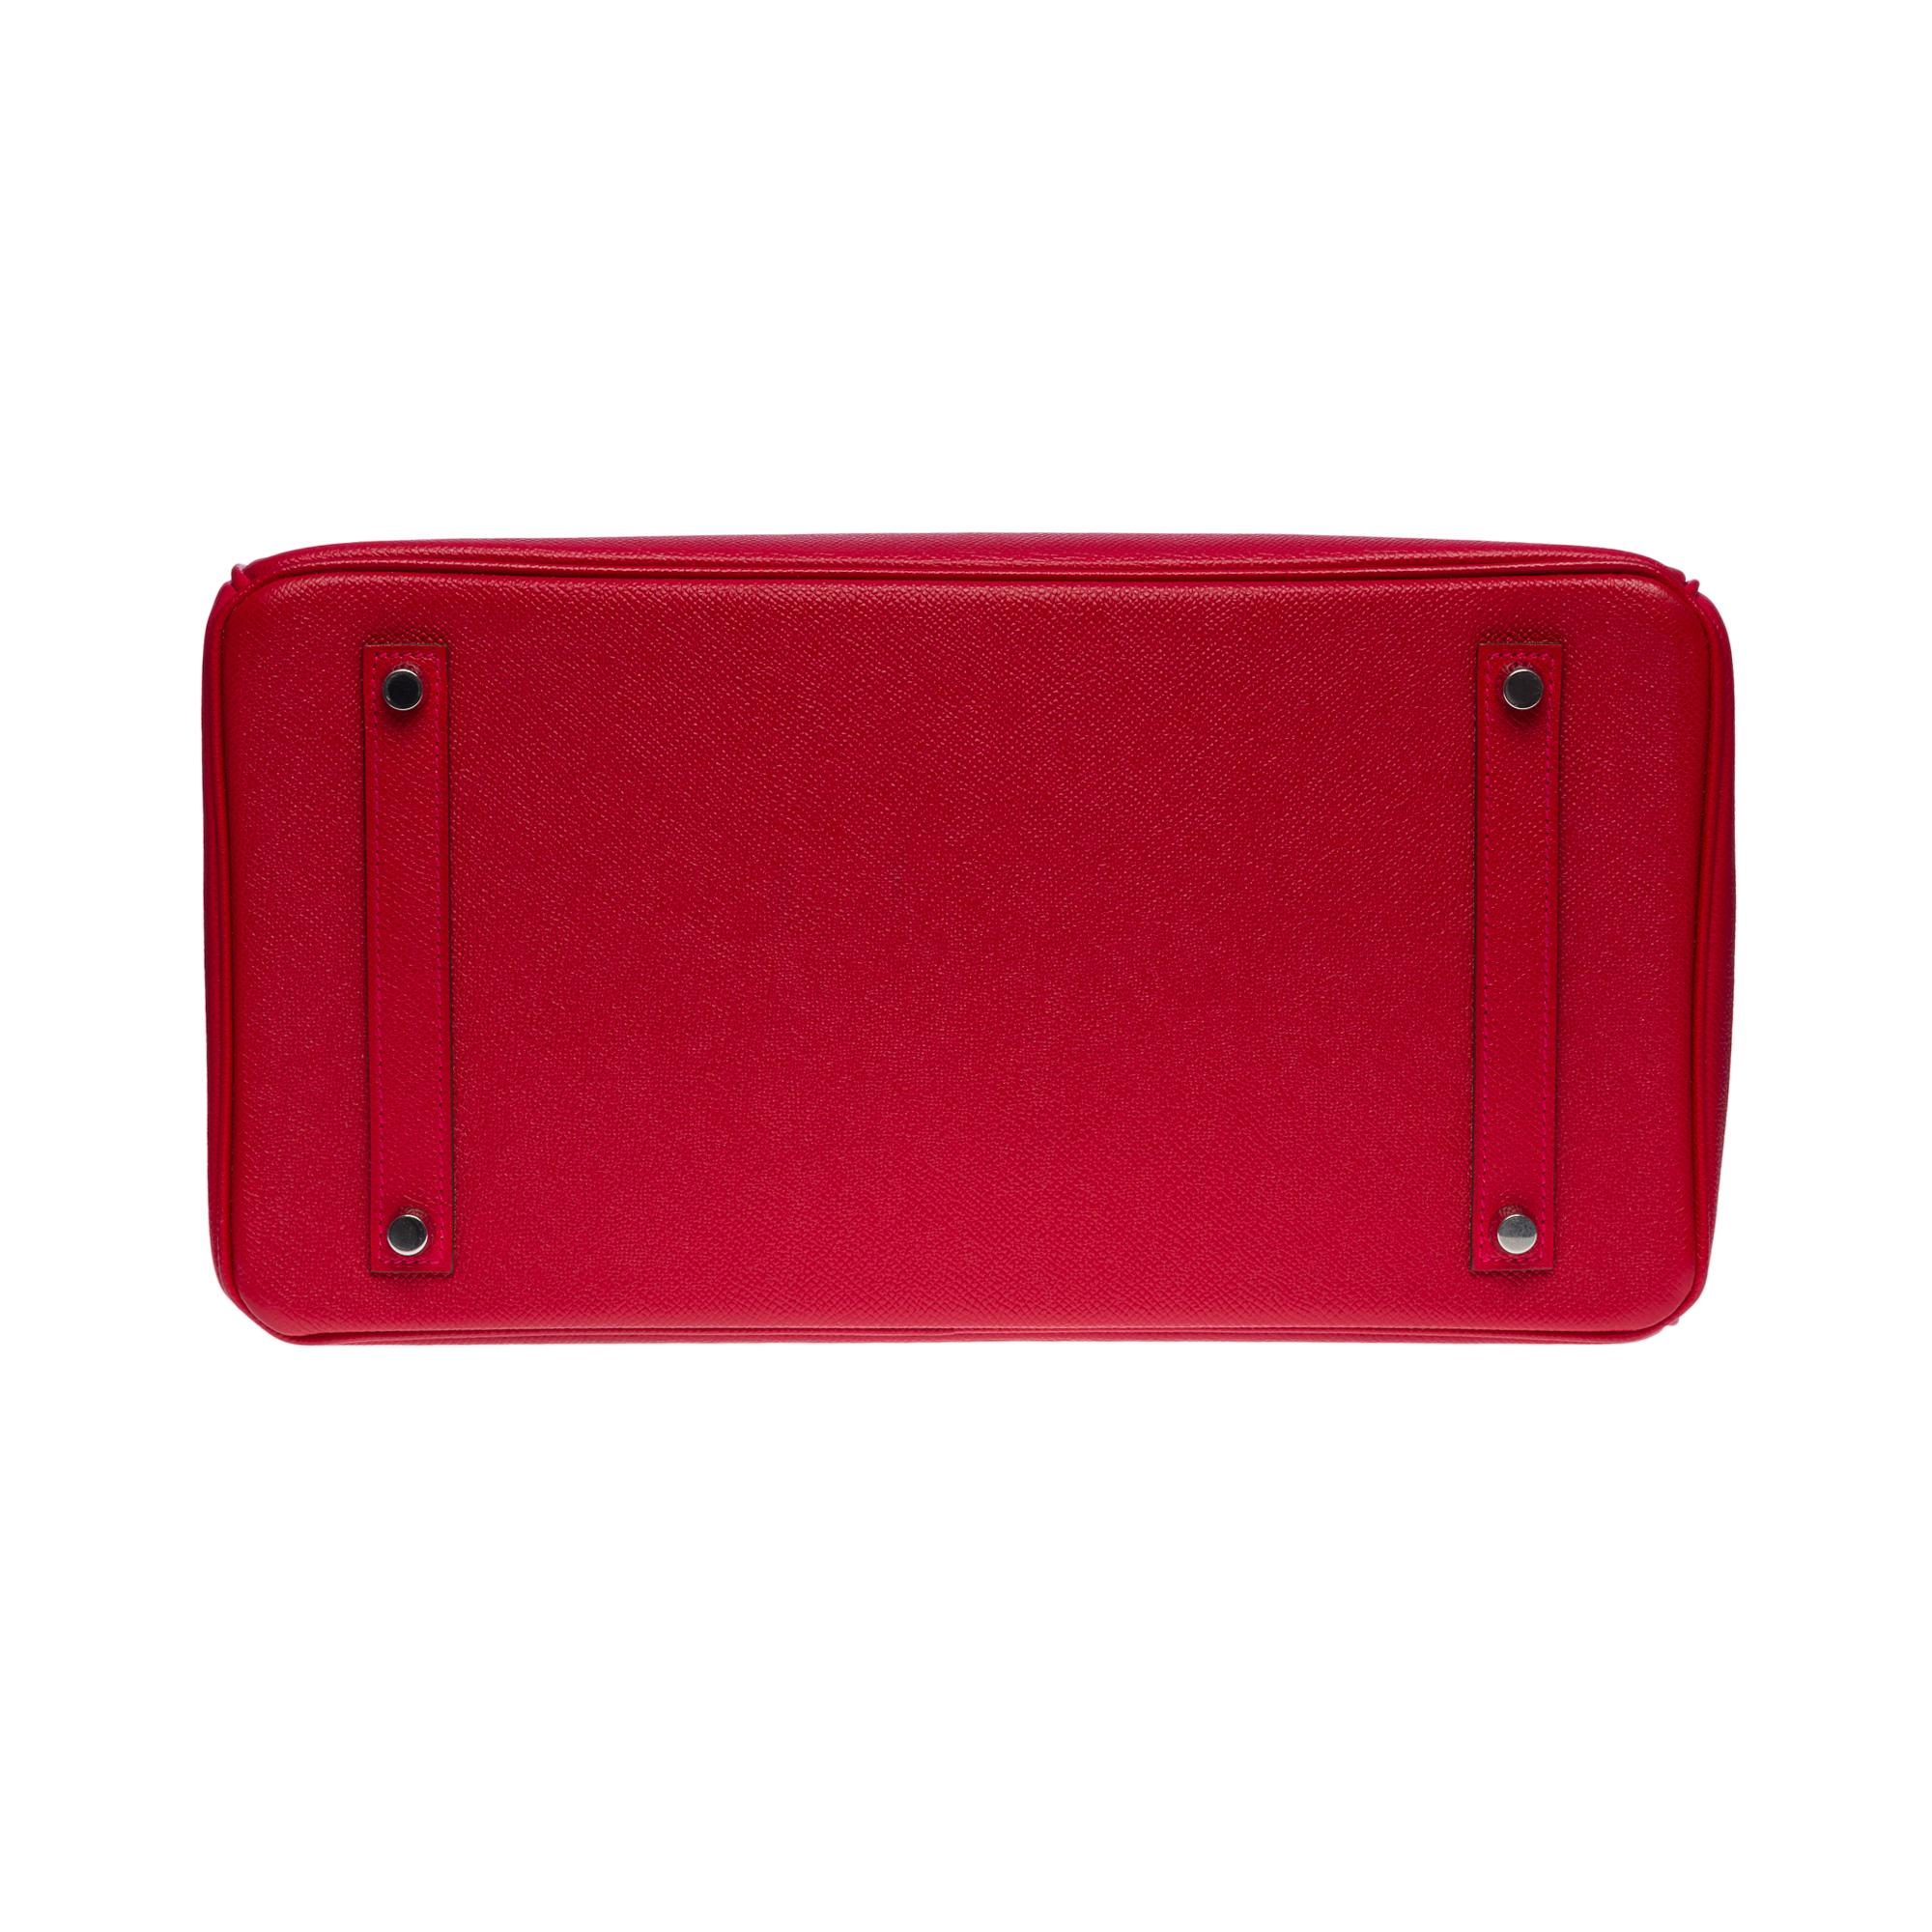 Stunning Hermès Birkin 35 handbag in Rouge Casaque Epsom leather, SHW 5